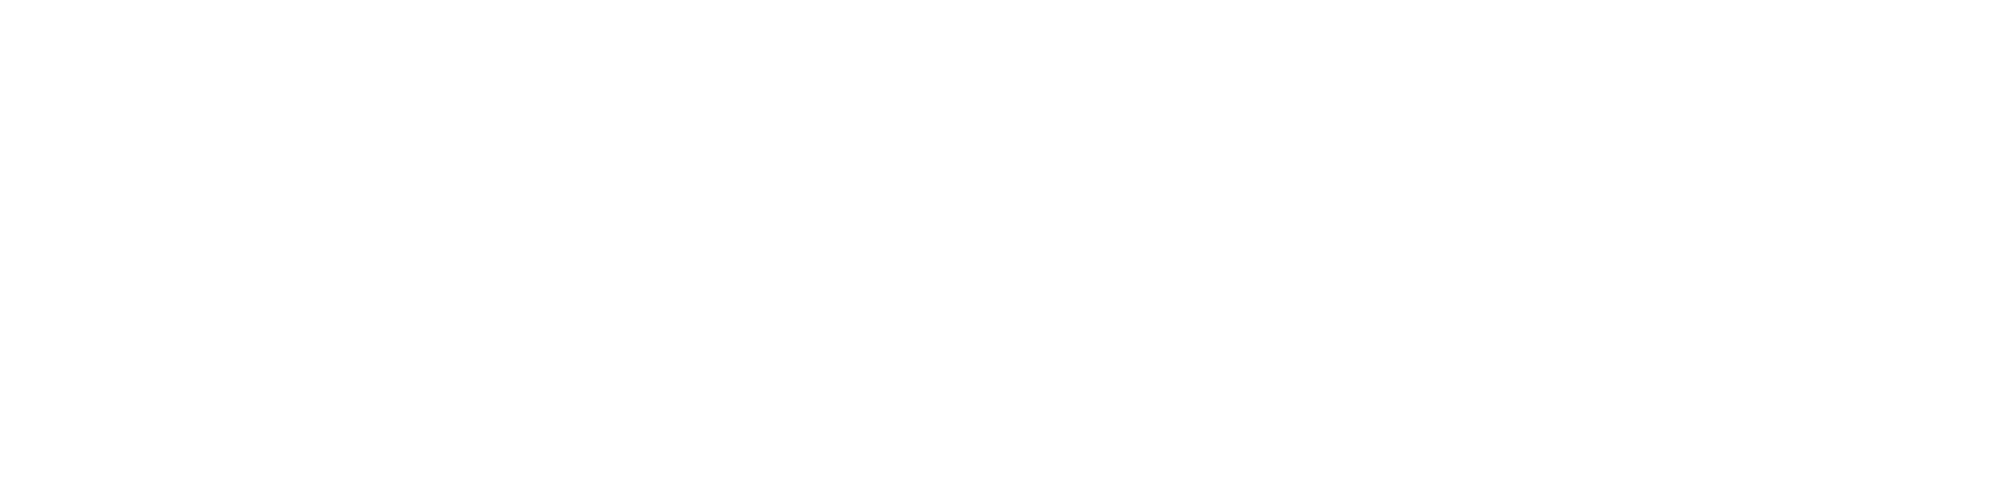 Newcells-logo-white